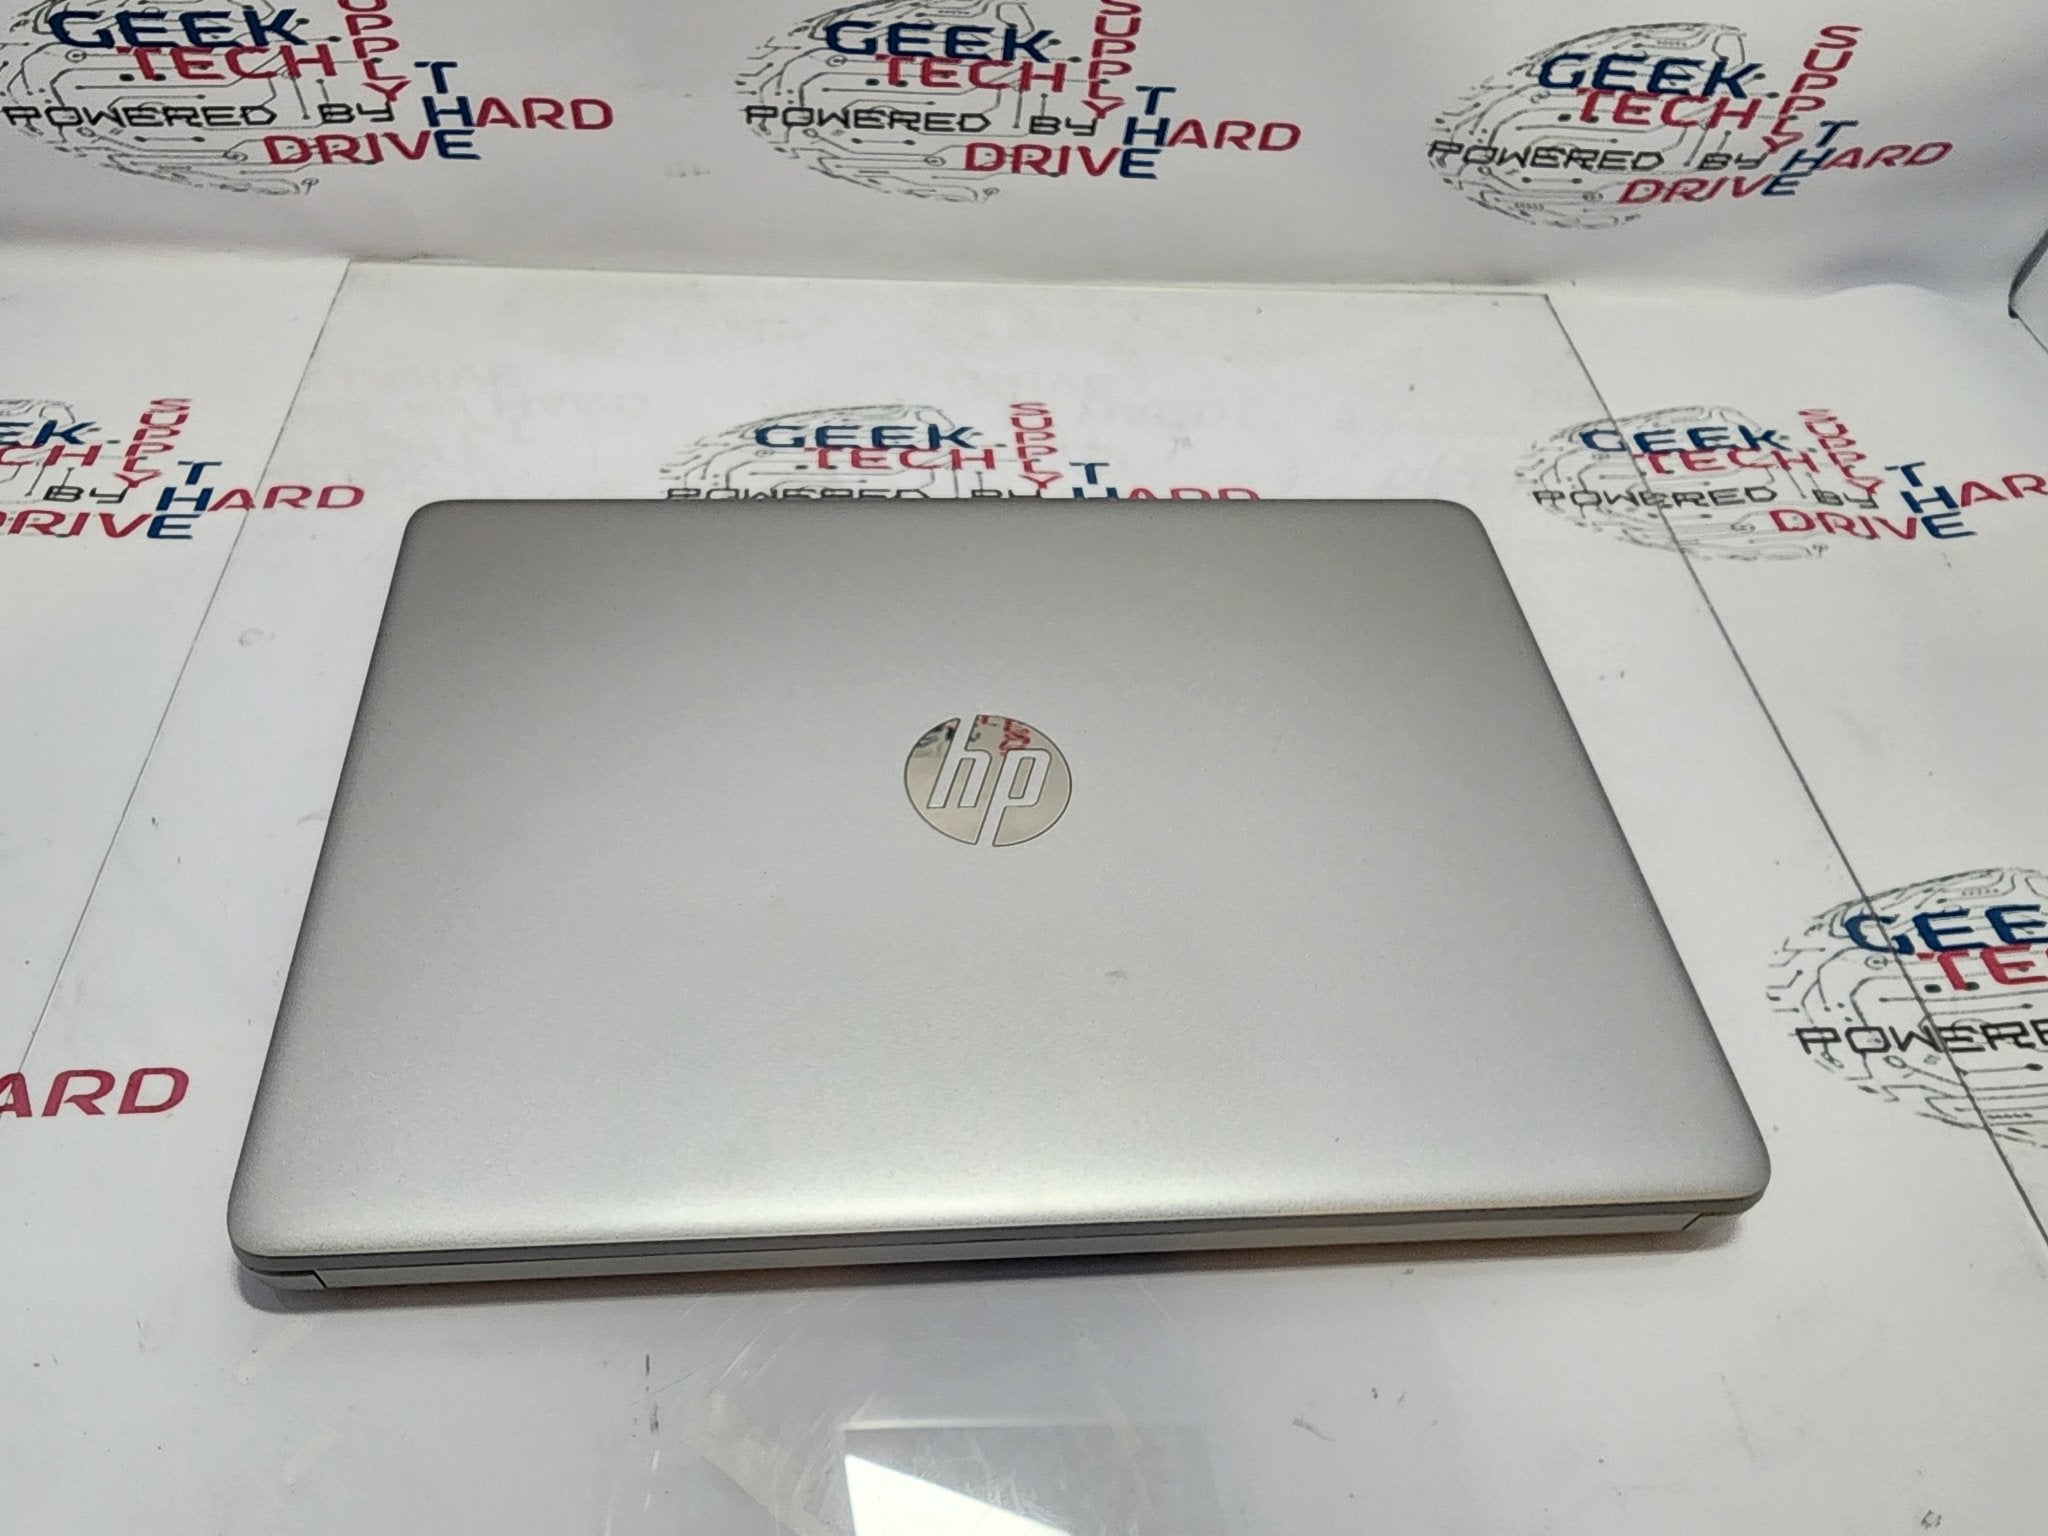 HP Notebook 14-dk0053od Windows 11 AMD A4-9125 Dual Core 64gb SSD 4gb RAM Silver | B Grade - Geek Tech